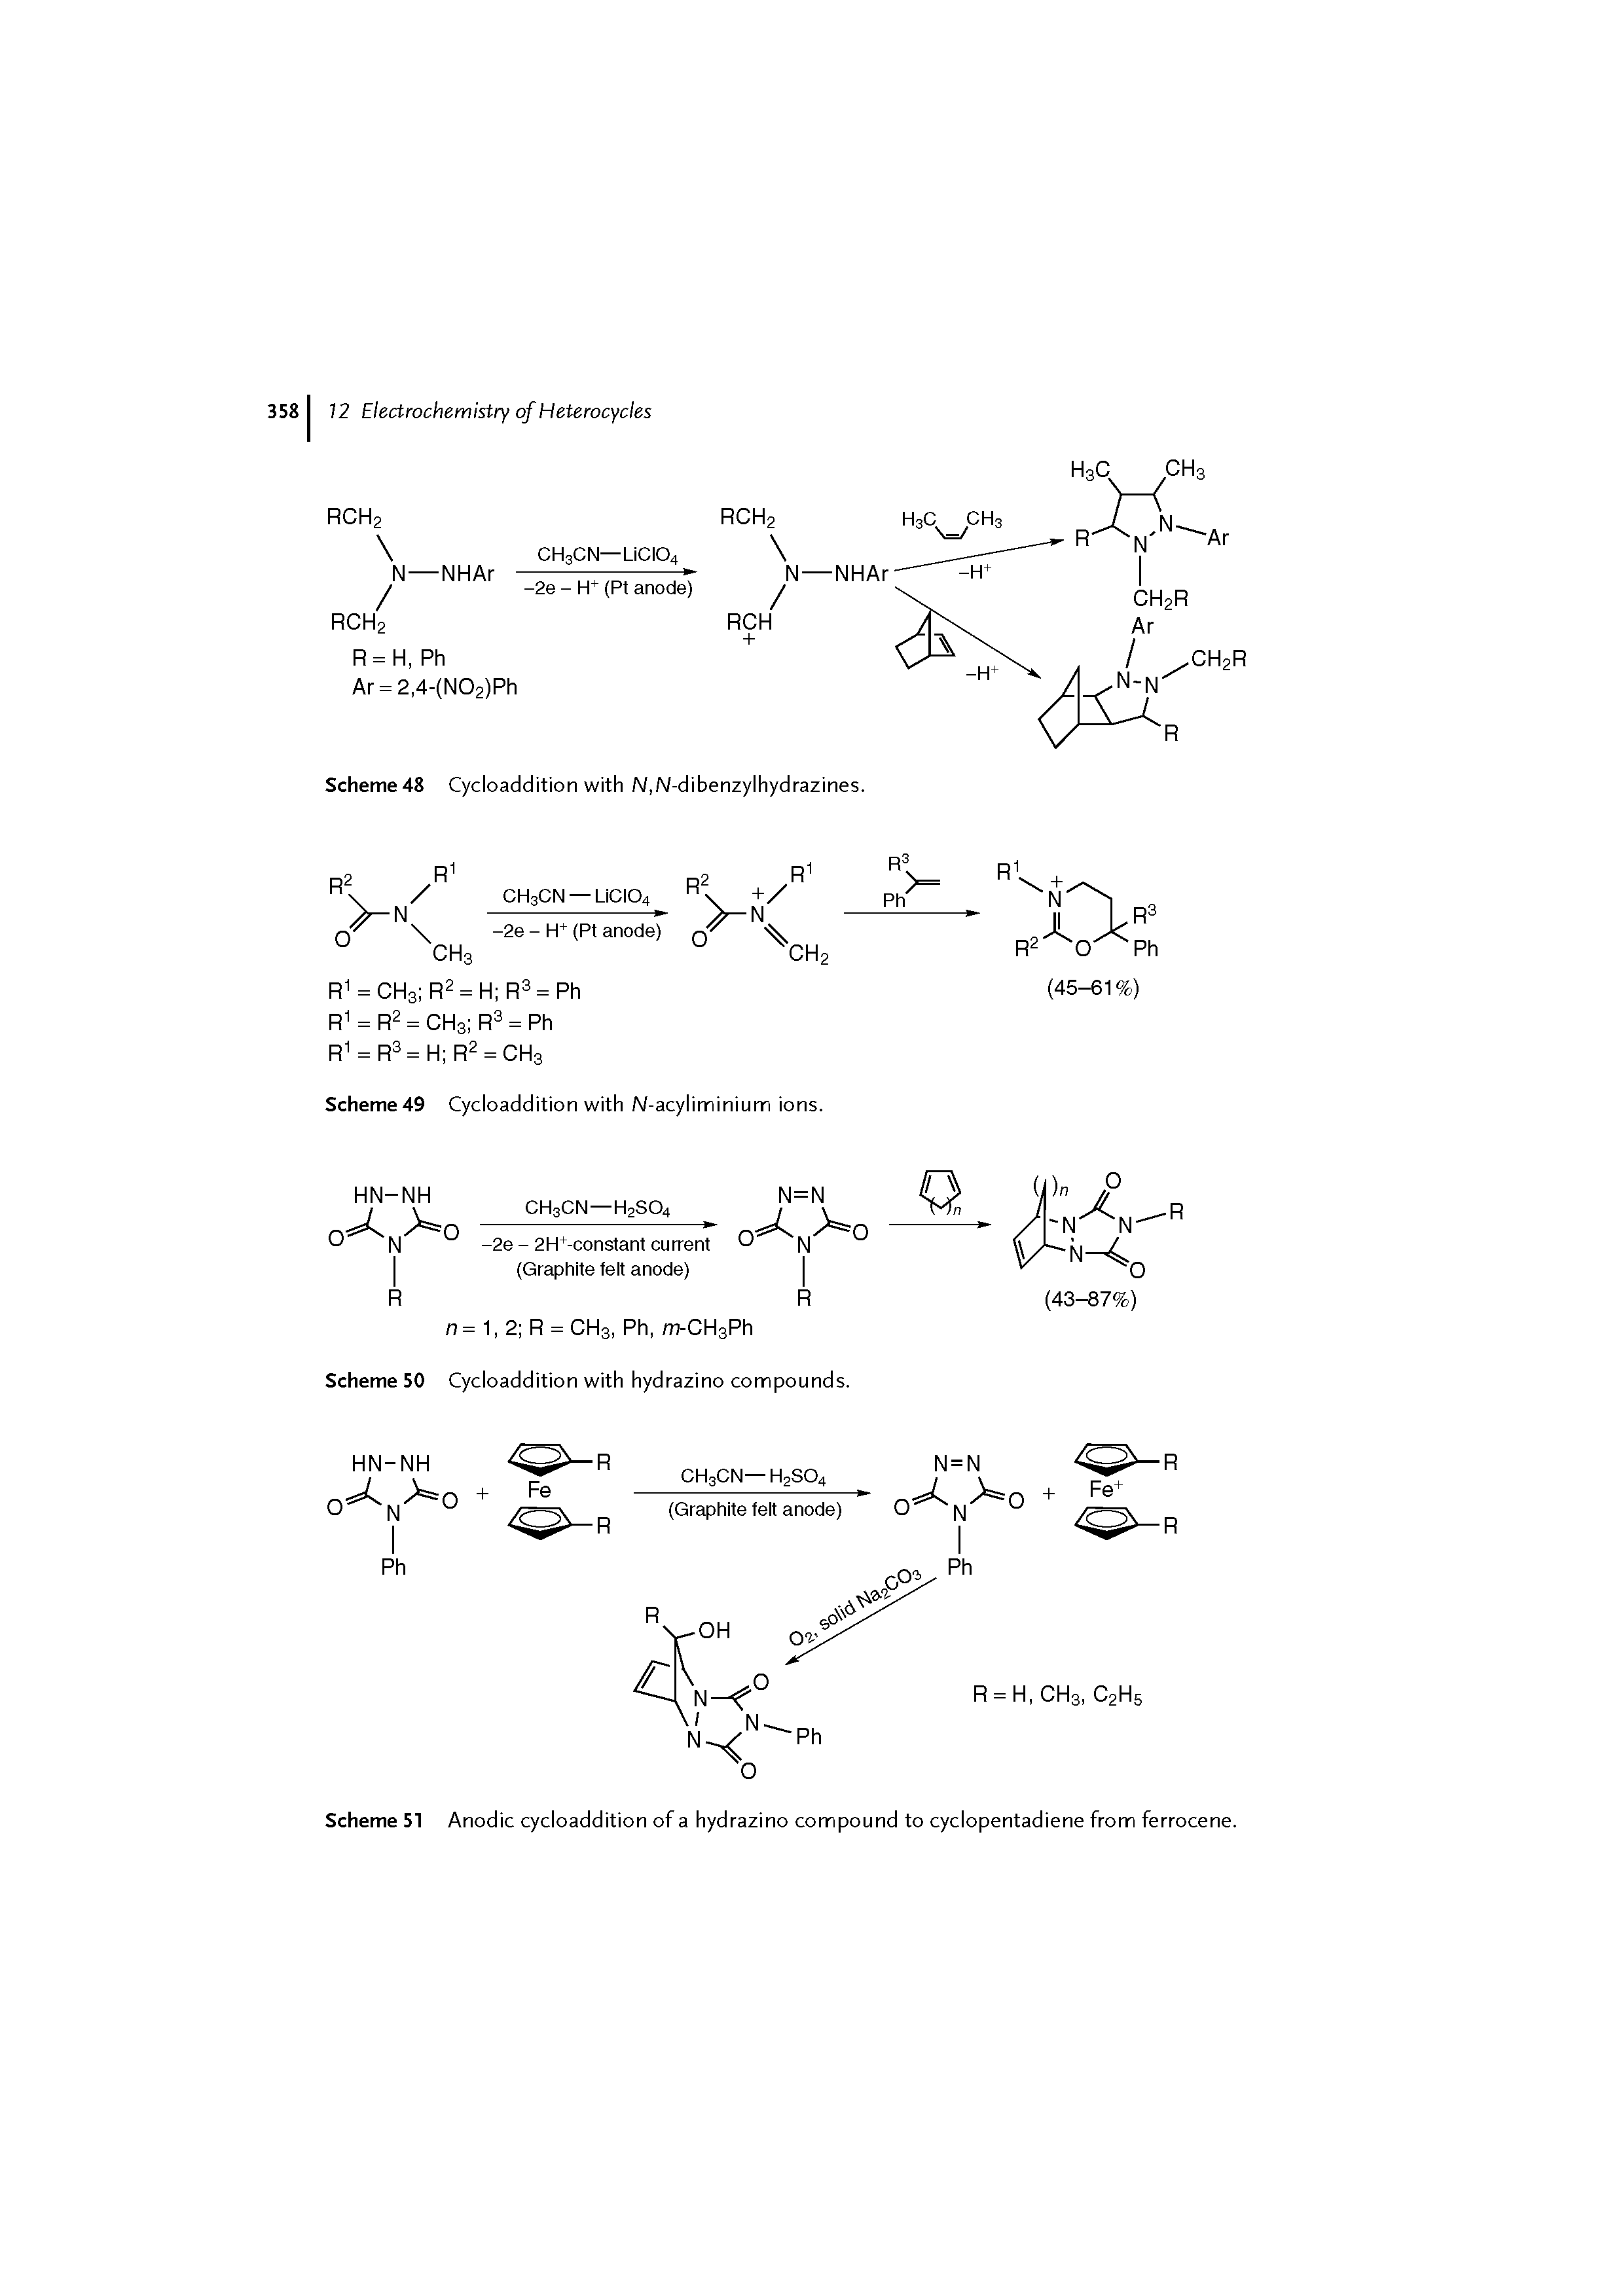 Scheme 51 Anodic cycloaddition of a hydrazino compound to cyclopentadiene from ferrocene.